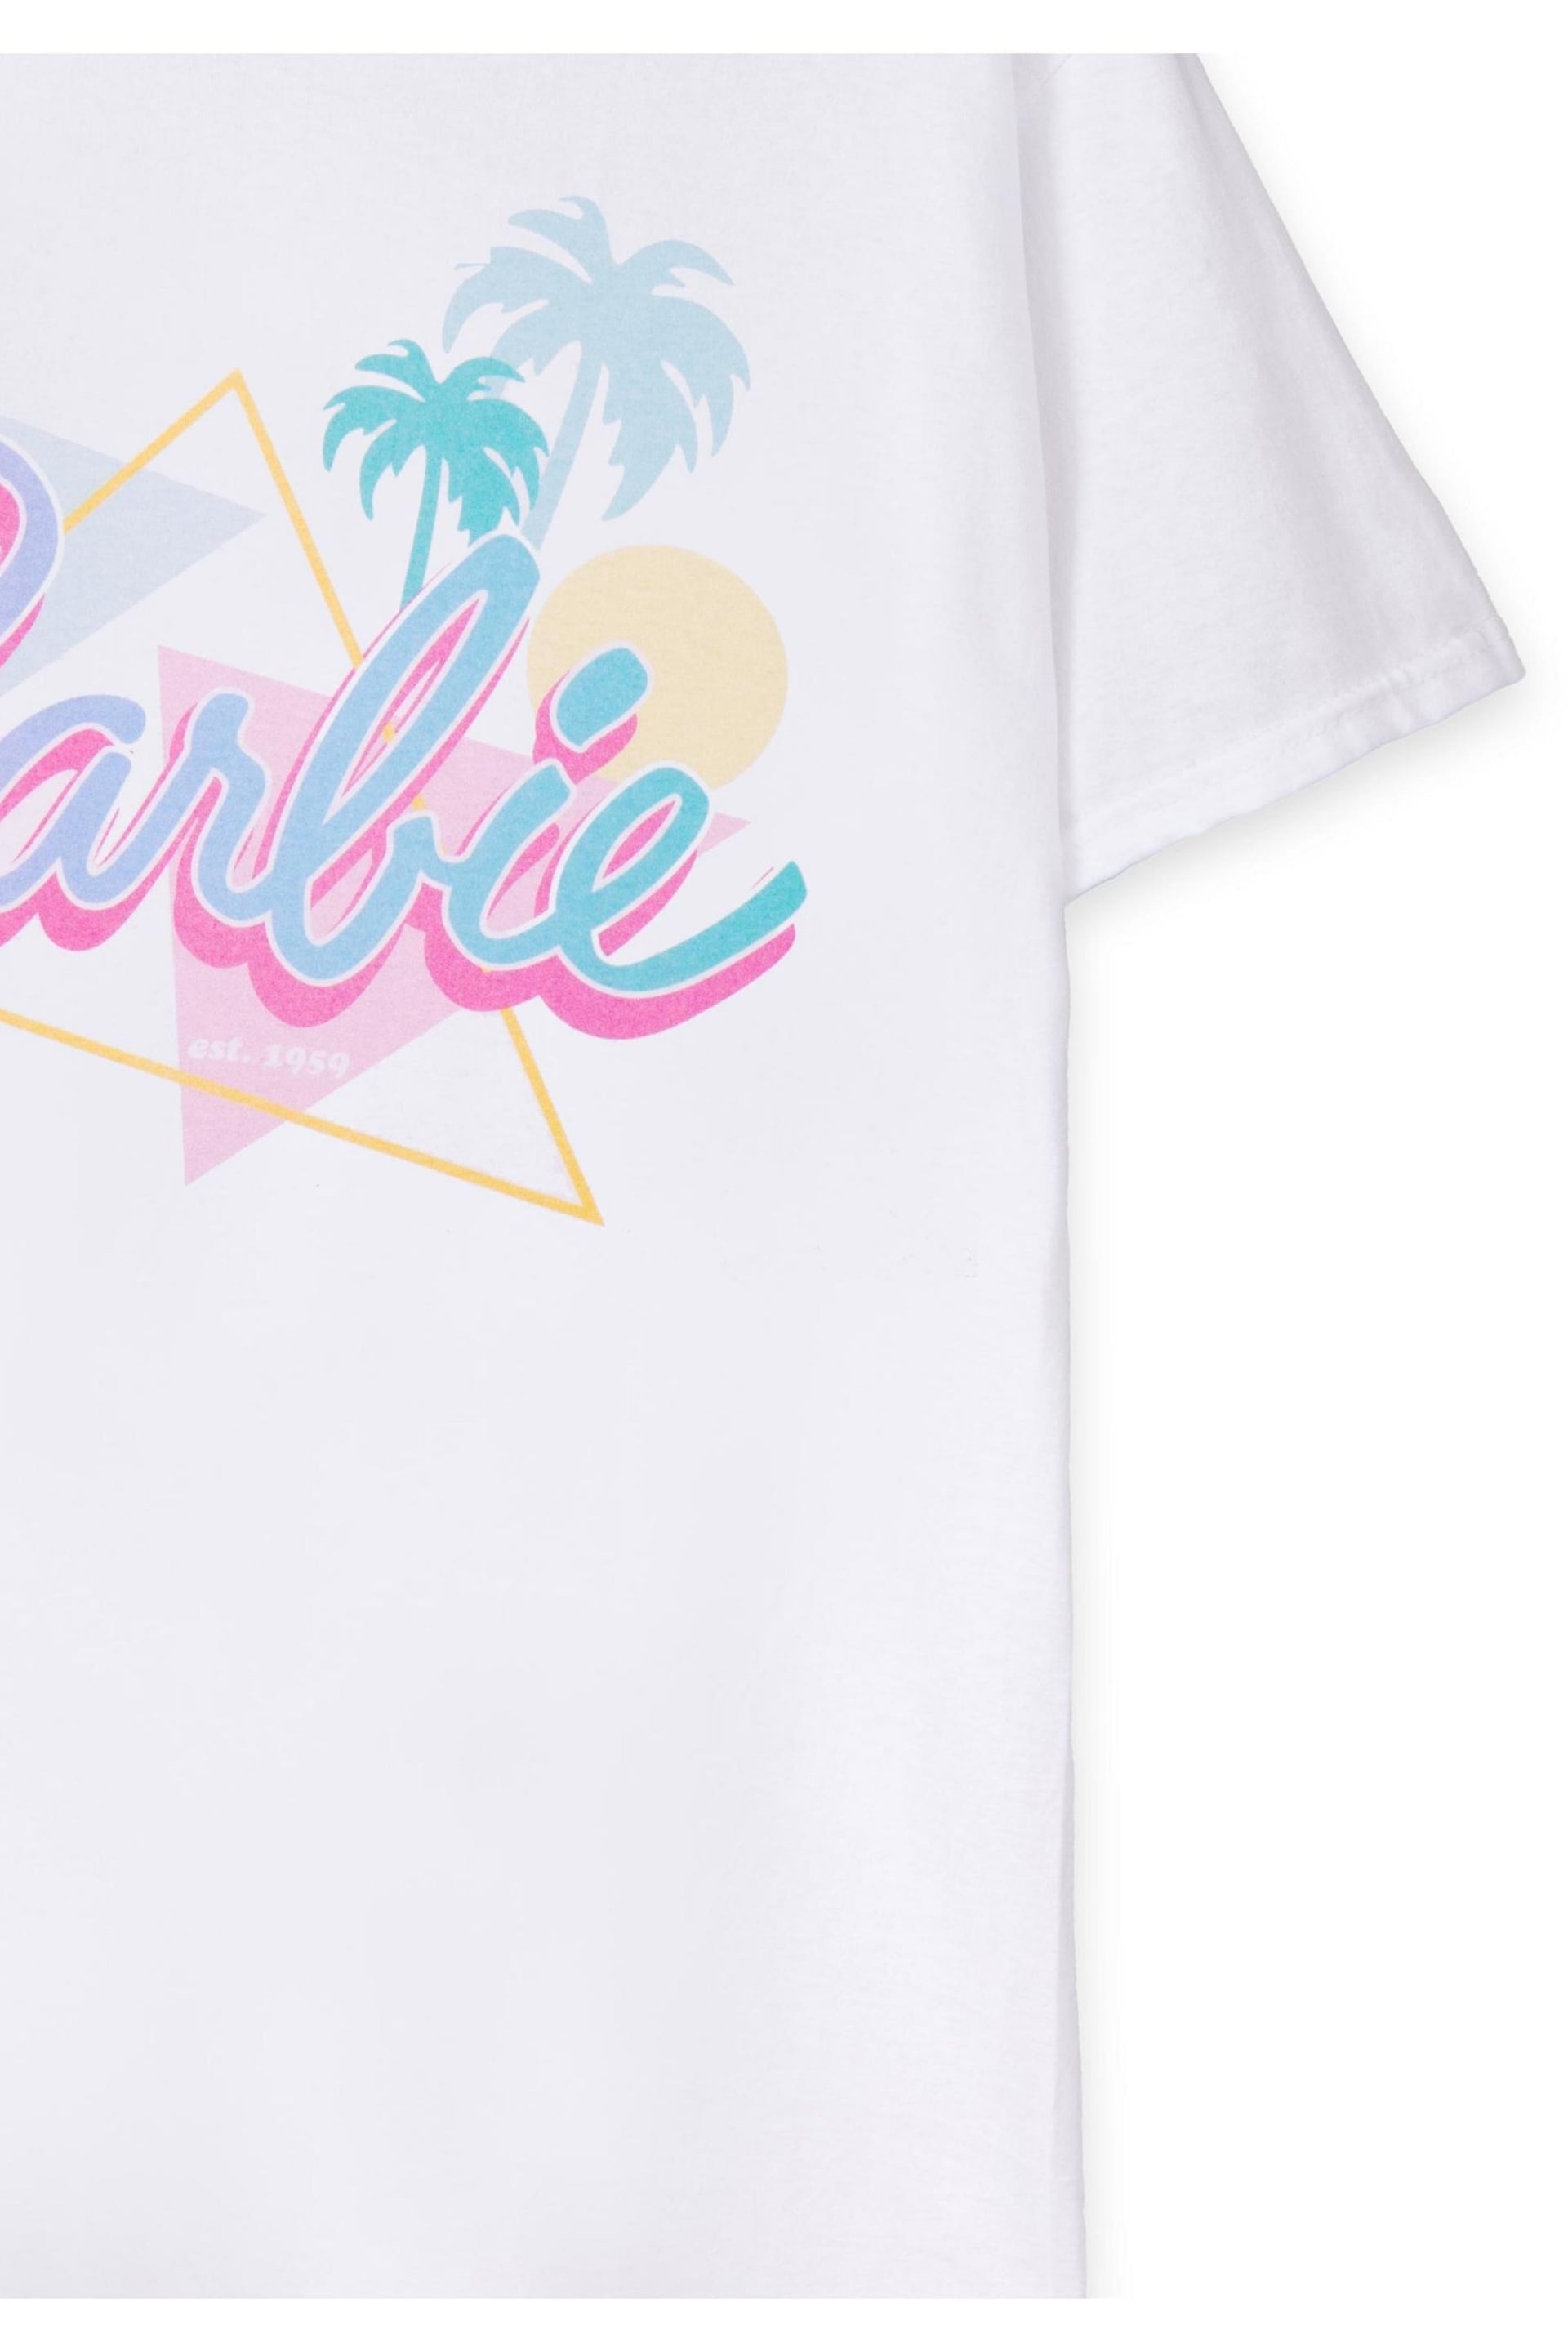 Vanilla Underground Barbie Ladies Licensing T-Shirt - Image 3 of 5